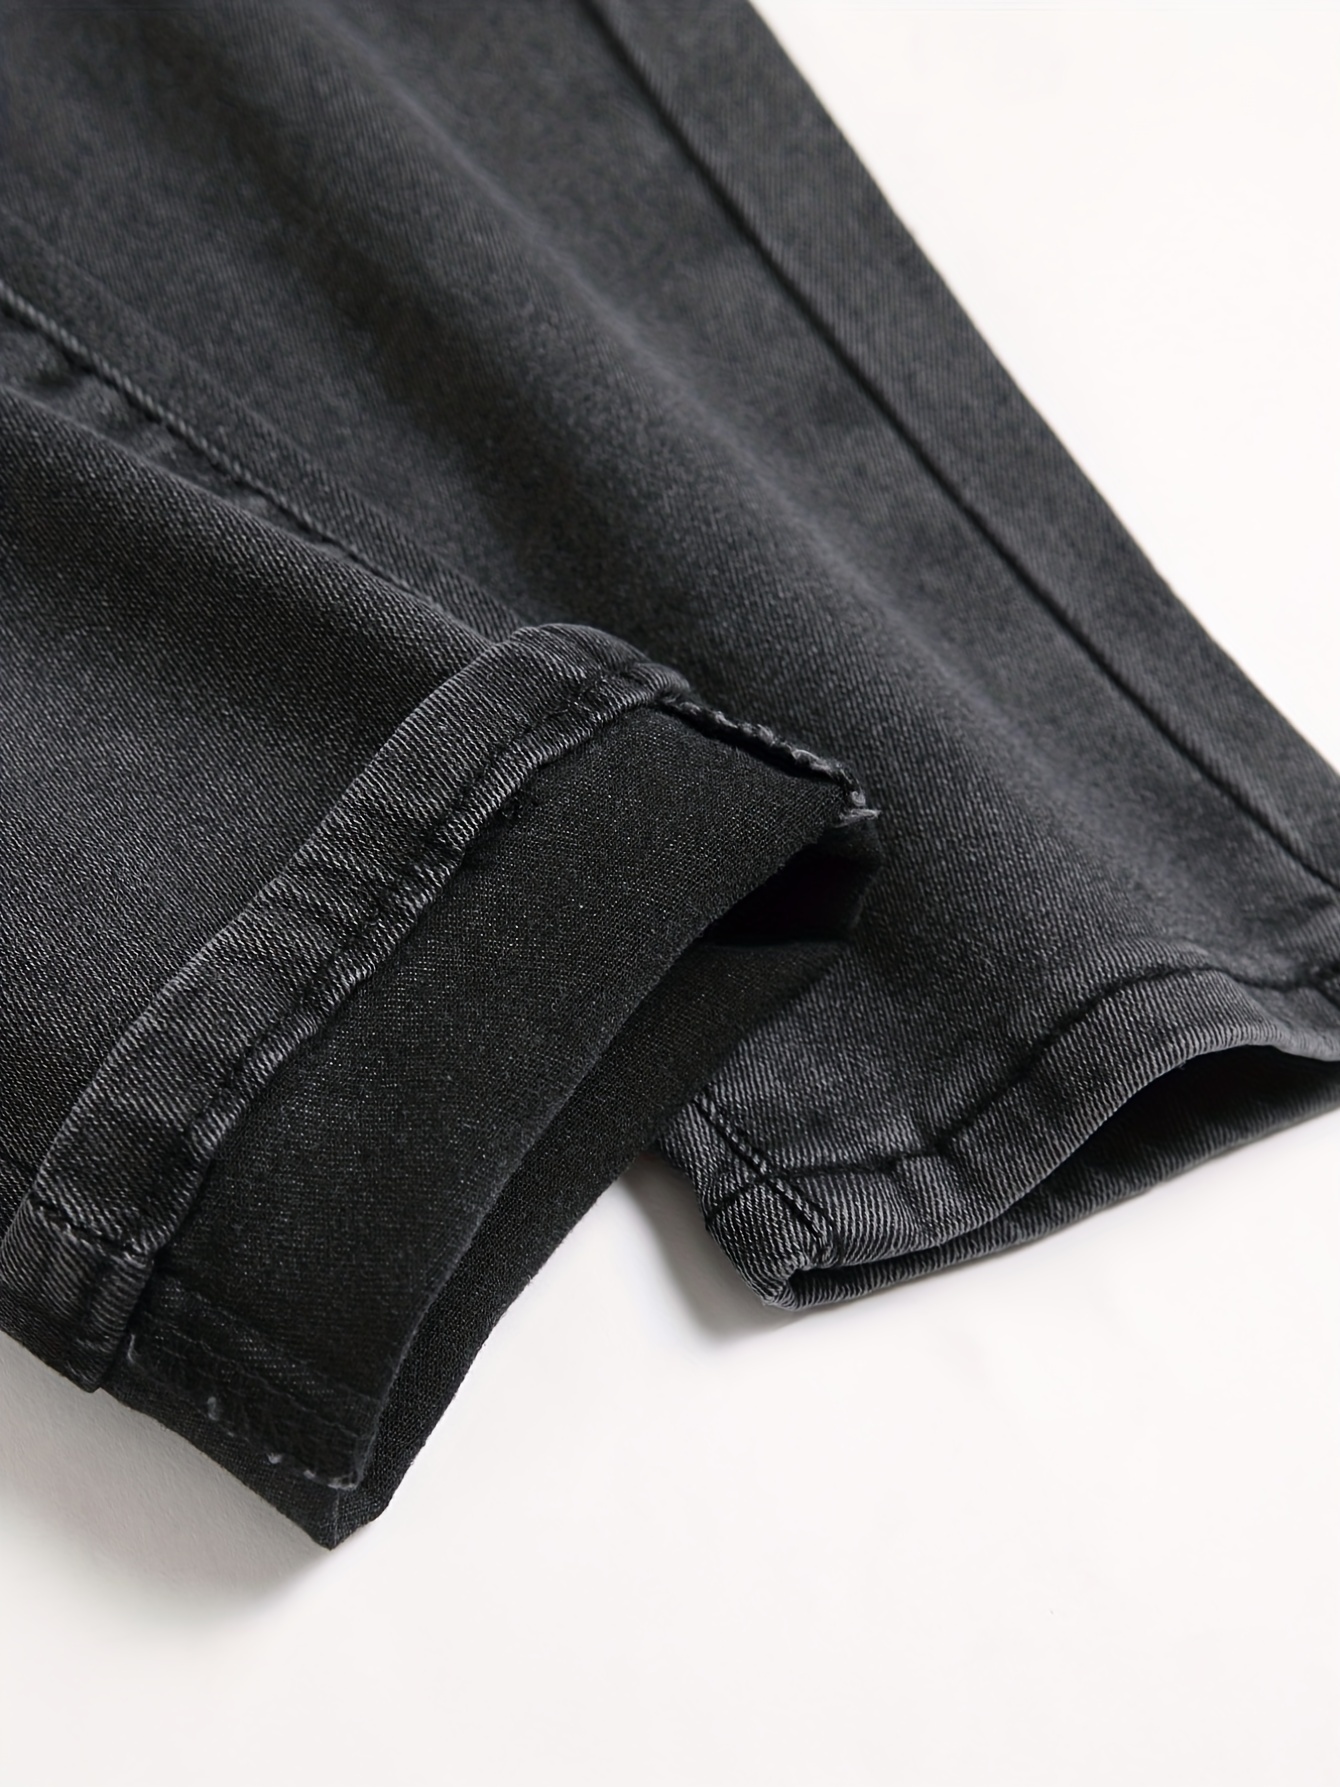 Classic Design Slim Fit Jeans, Men's Casual Street Style Distressed Medium  Stretch Denim Pants